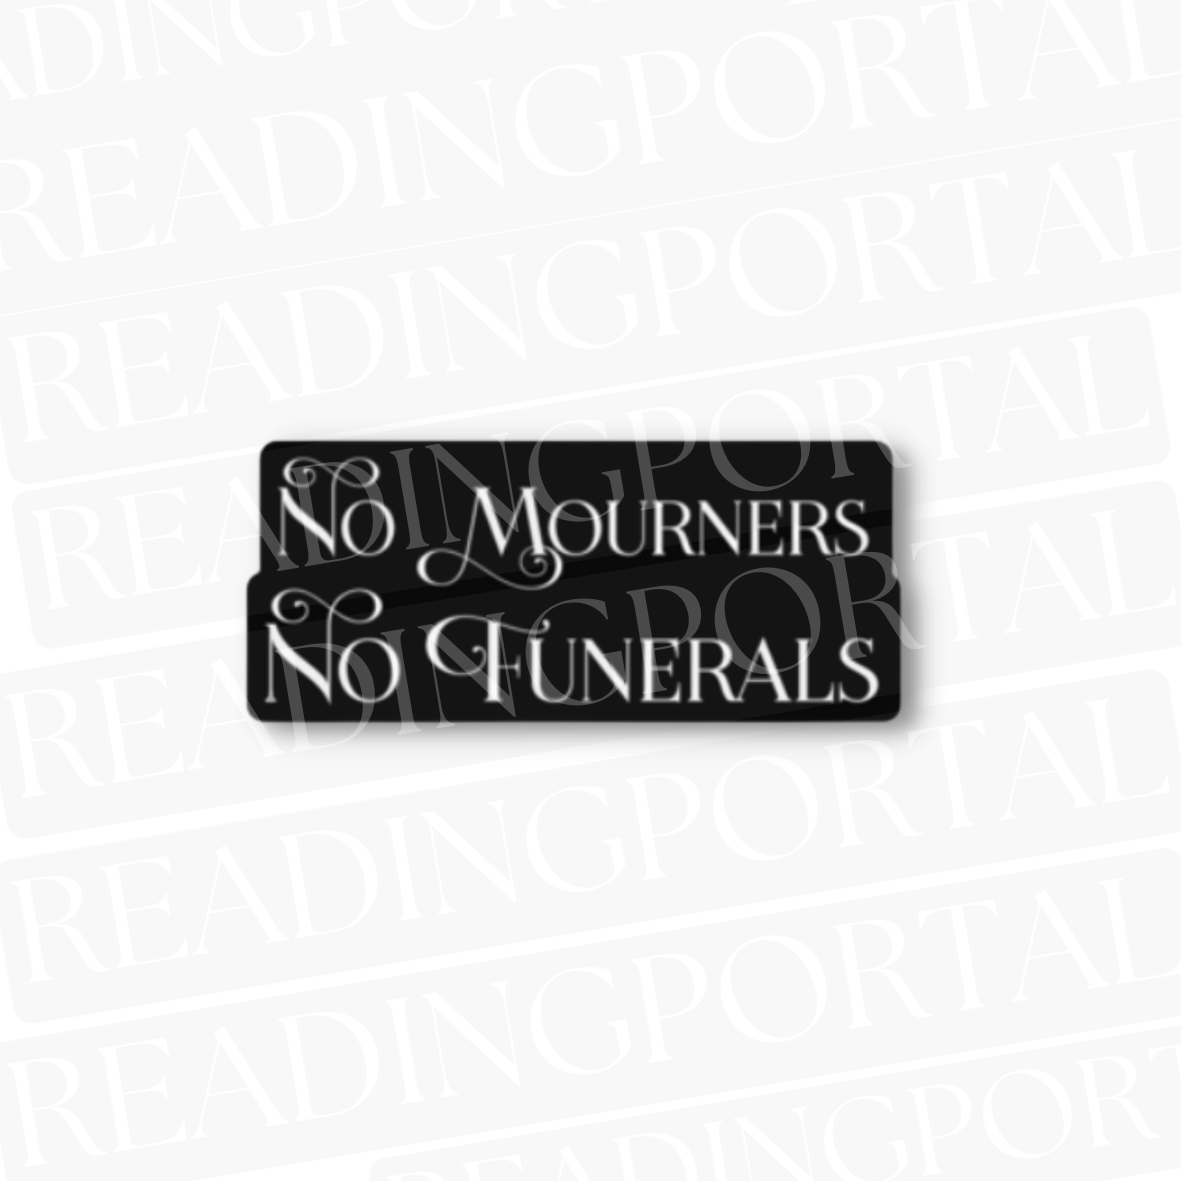 no mourners, no funerals